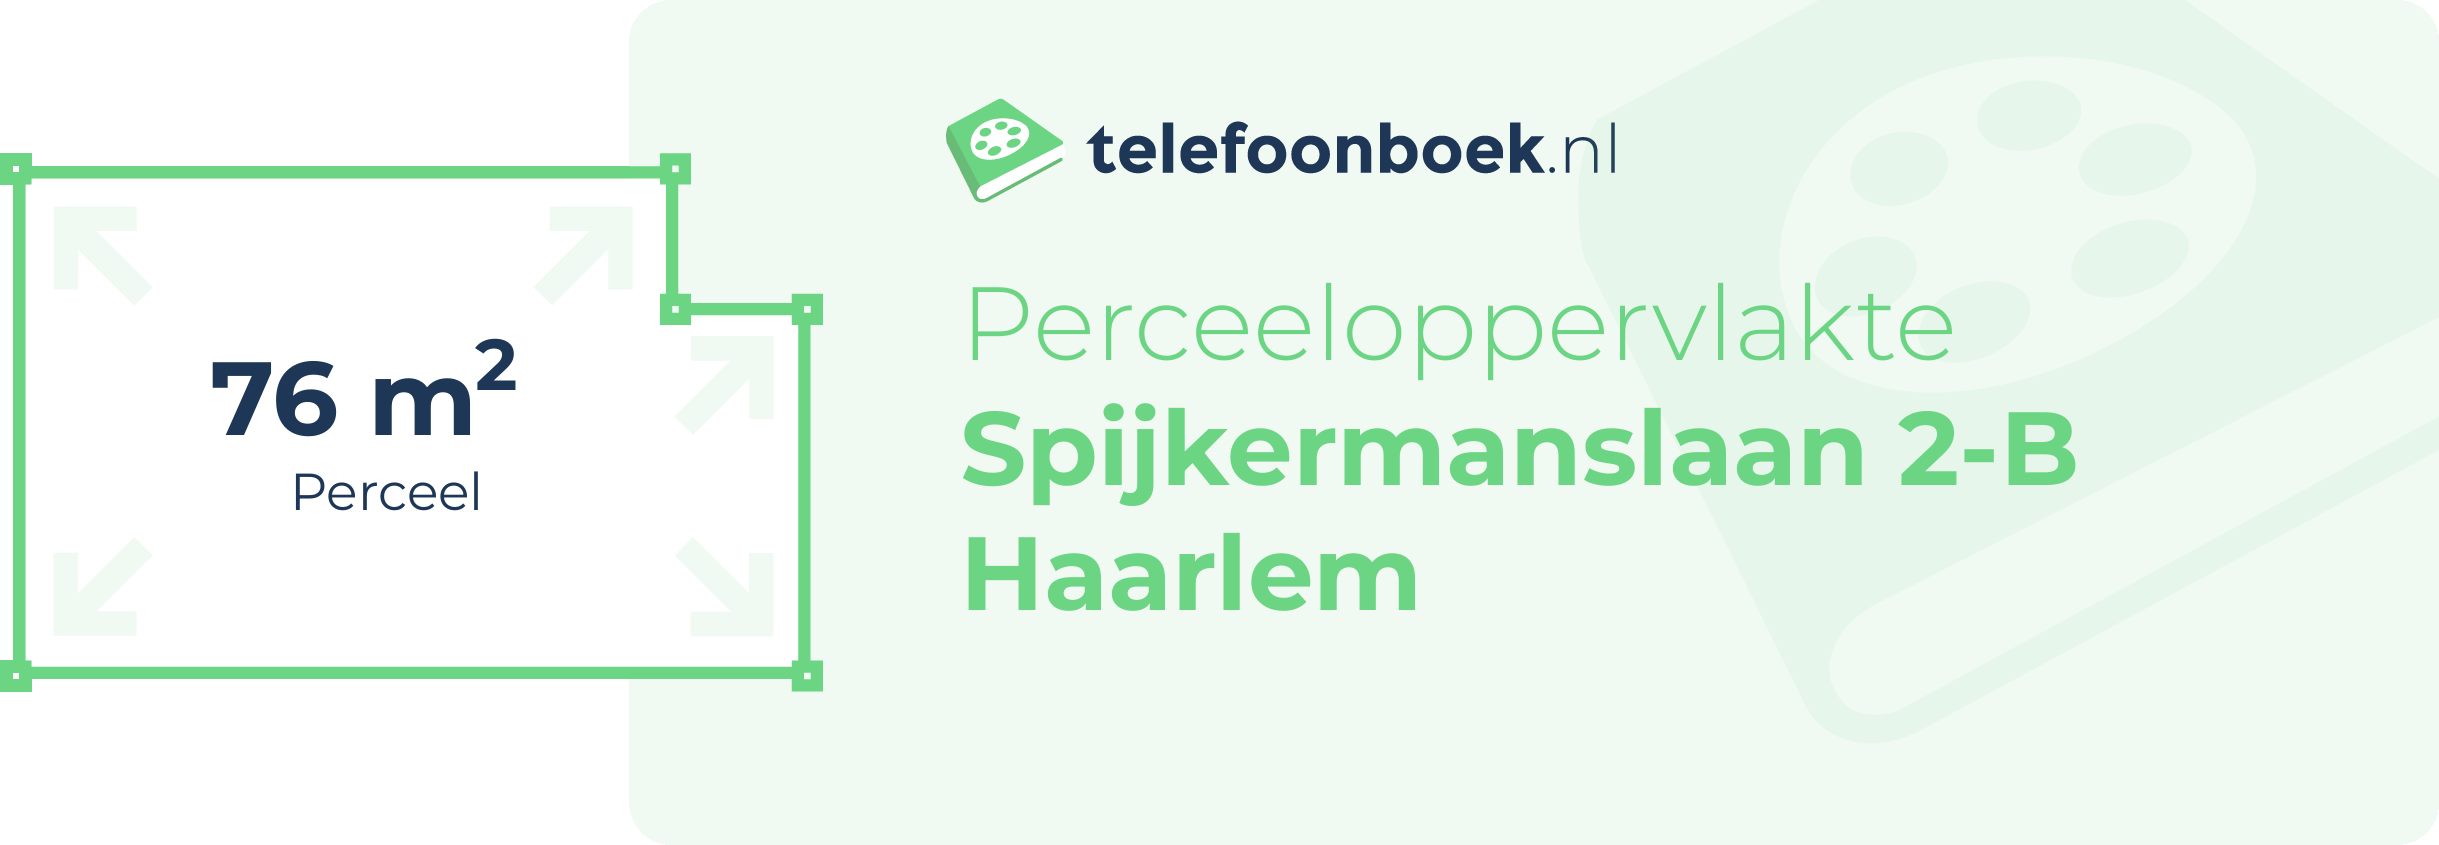 Perceeloppervlakte Spijkermanslaan 2-B Haarlem